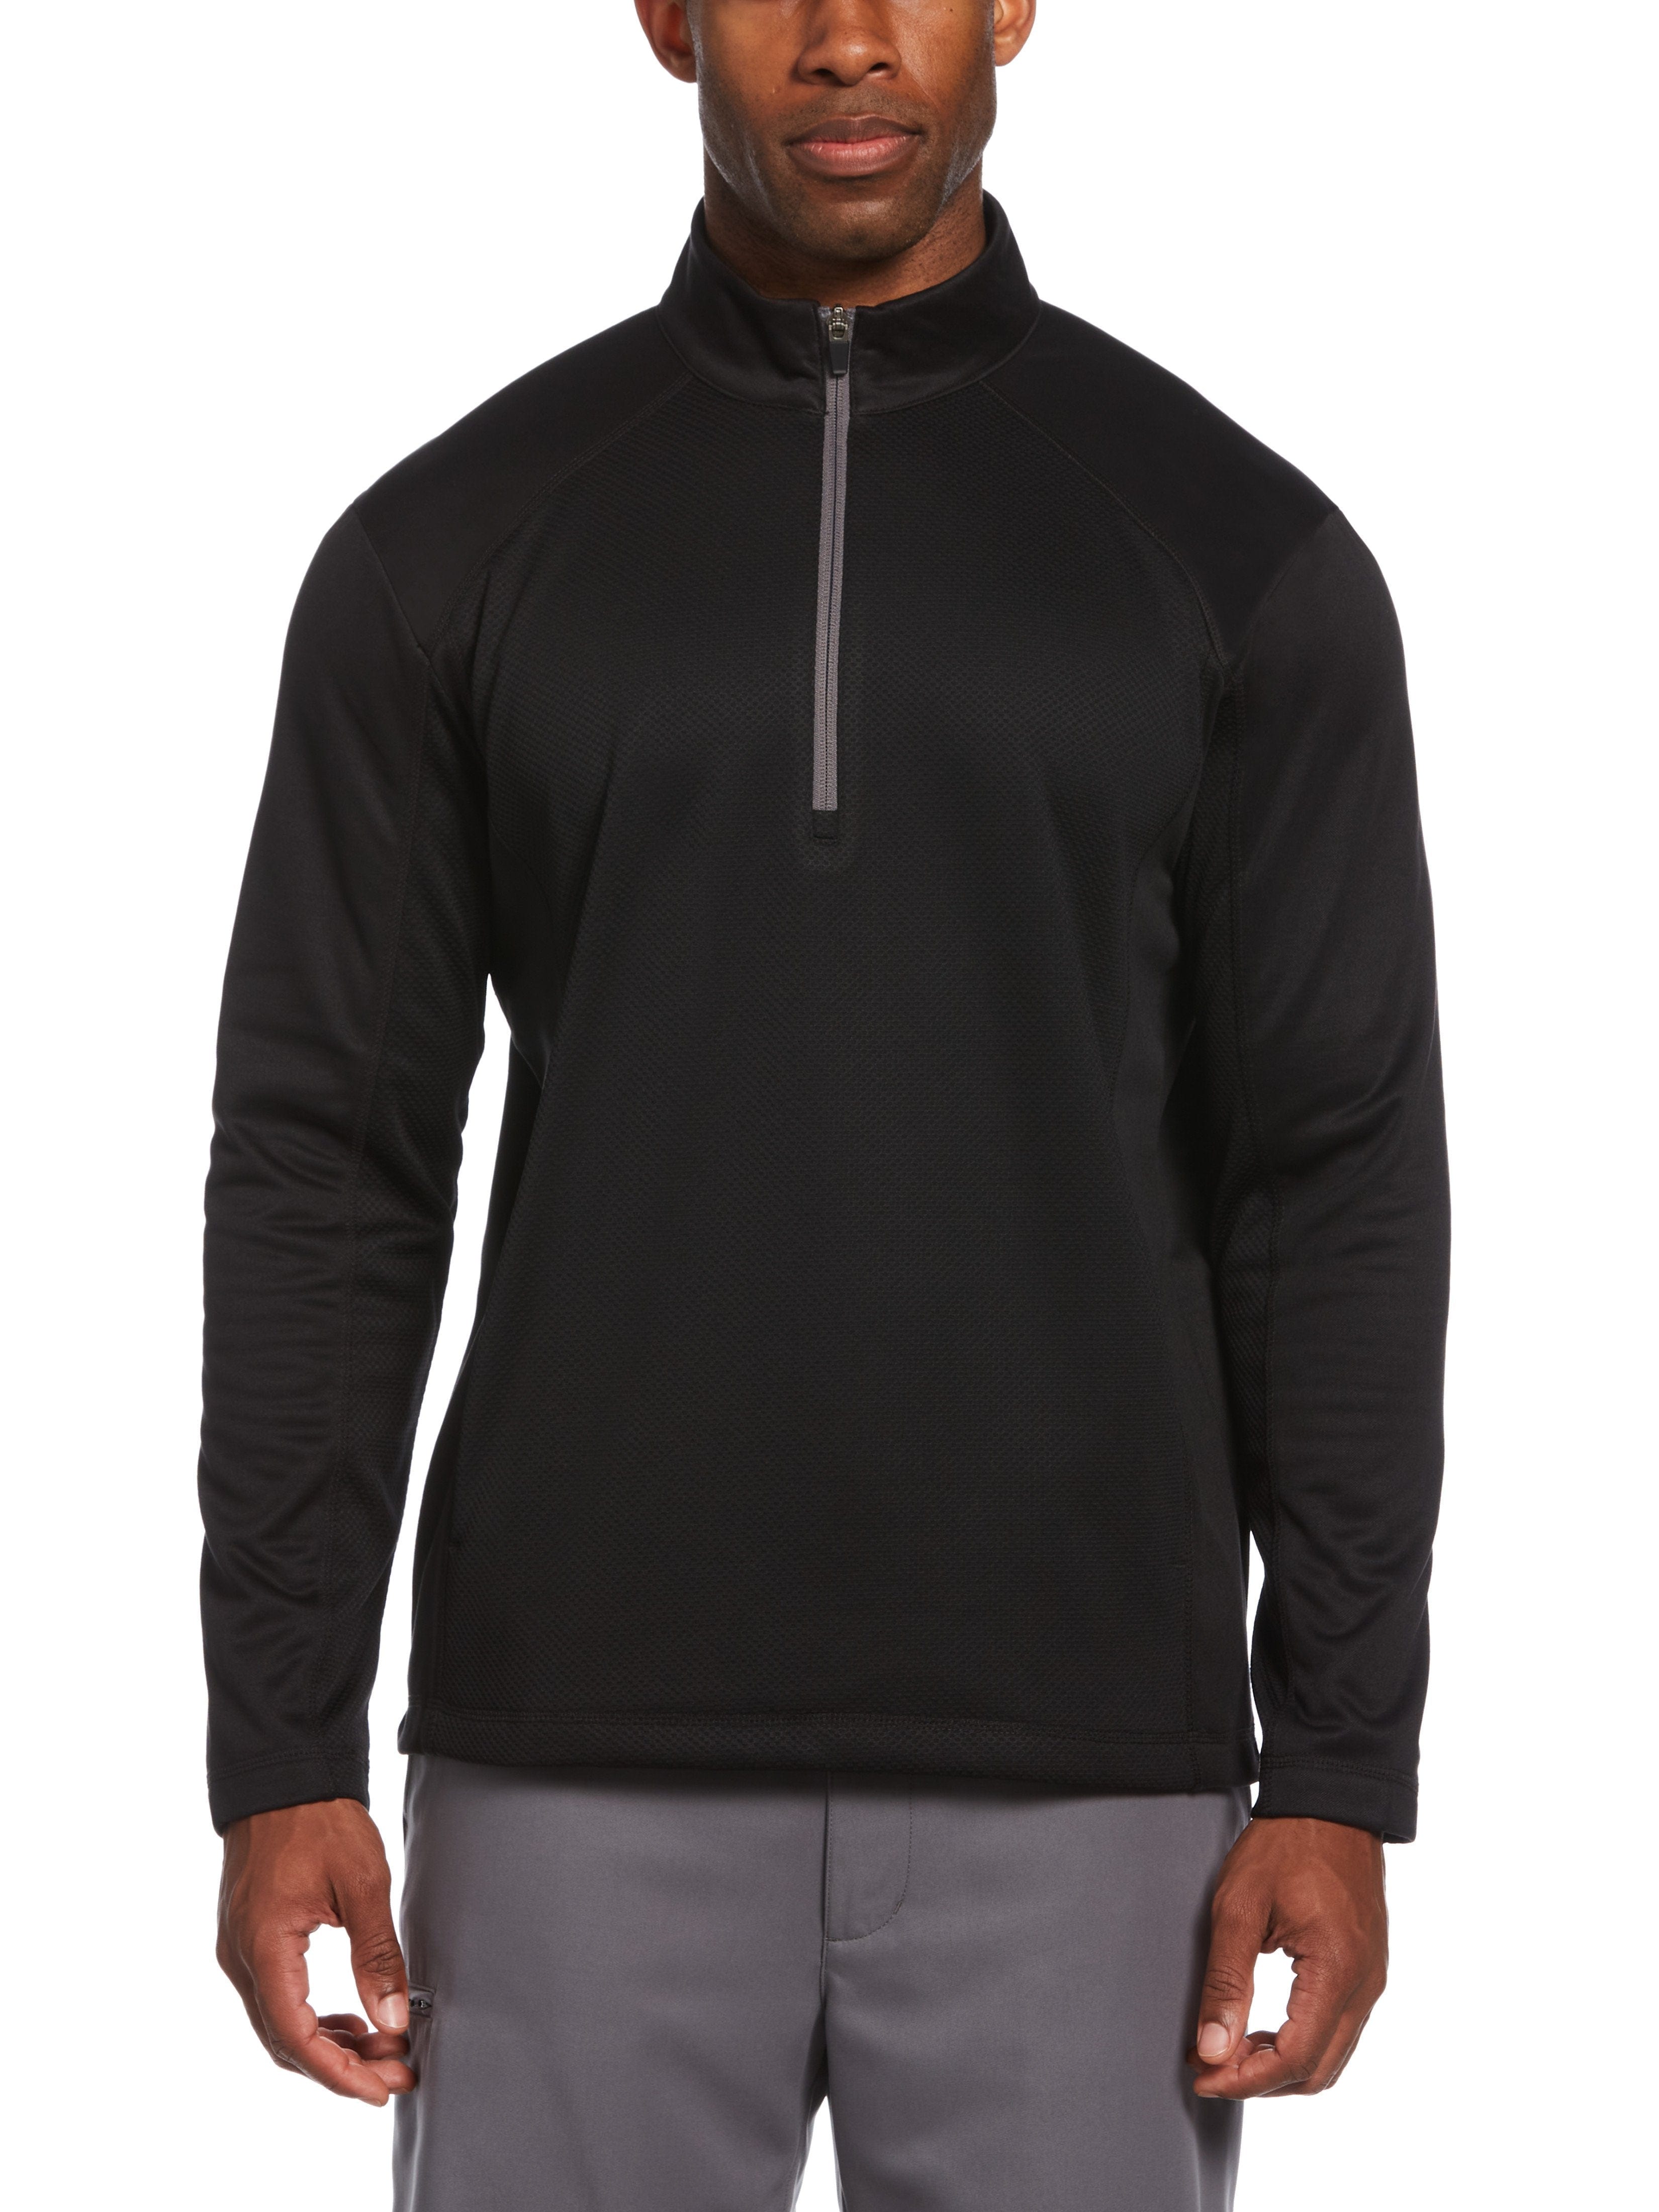 PGA TOUR Apparel Mens Mixed Texture Fleece 1/4 Zip Golf Jacket Top, Size XL, Black, 100% Polyester | Golf Apparel Shop